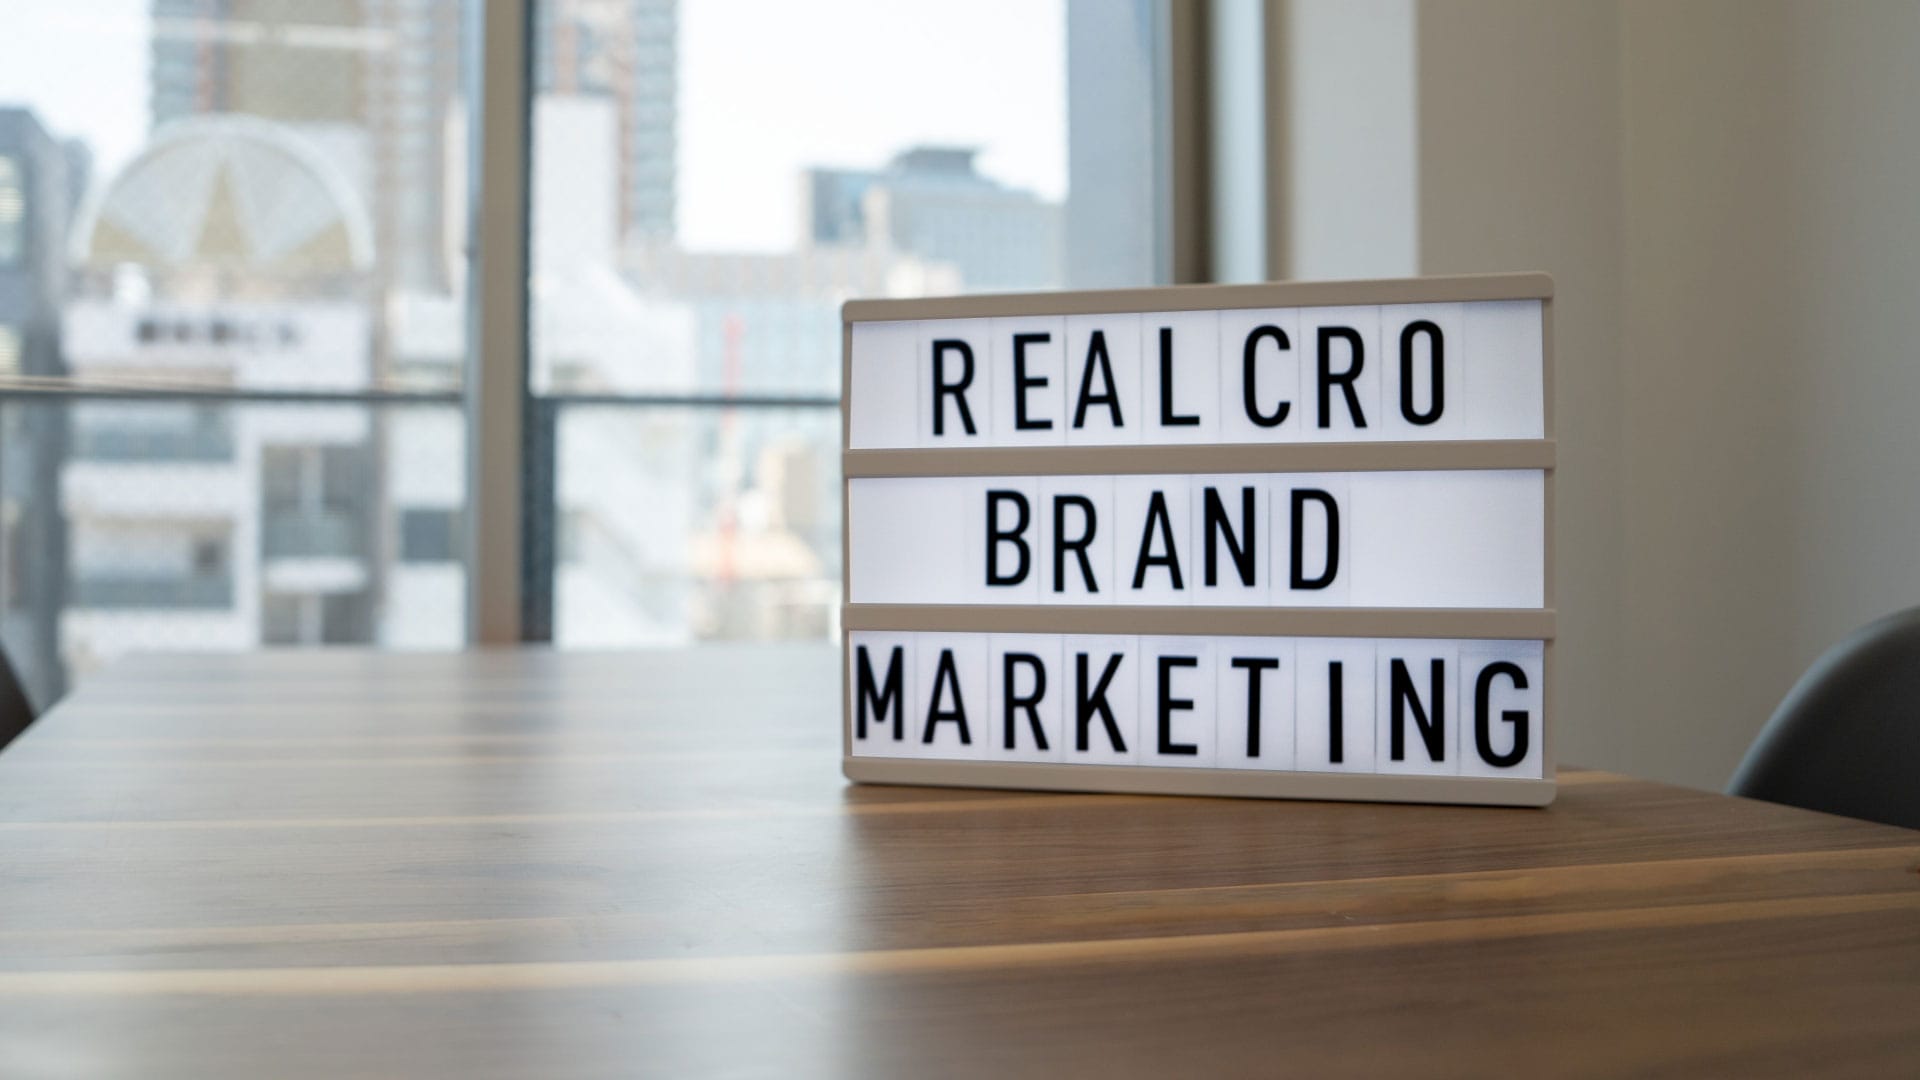 RealCRO Brand Marketing Agency in Japan